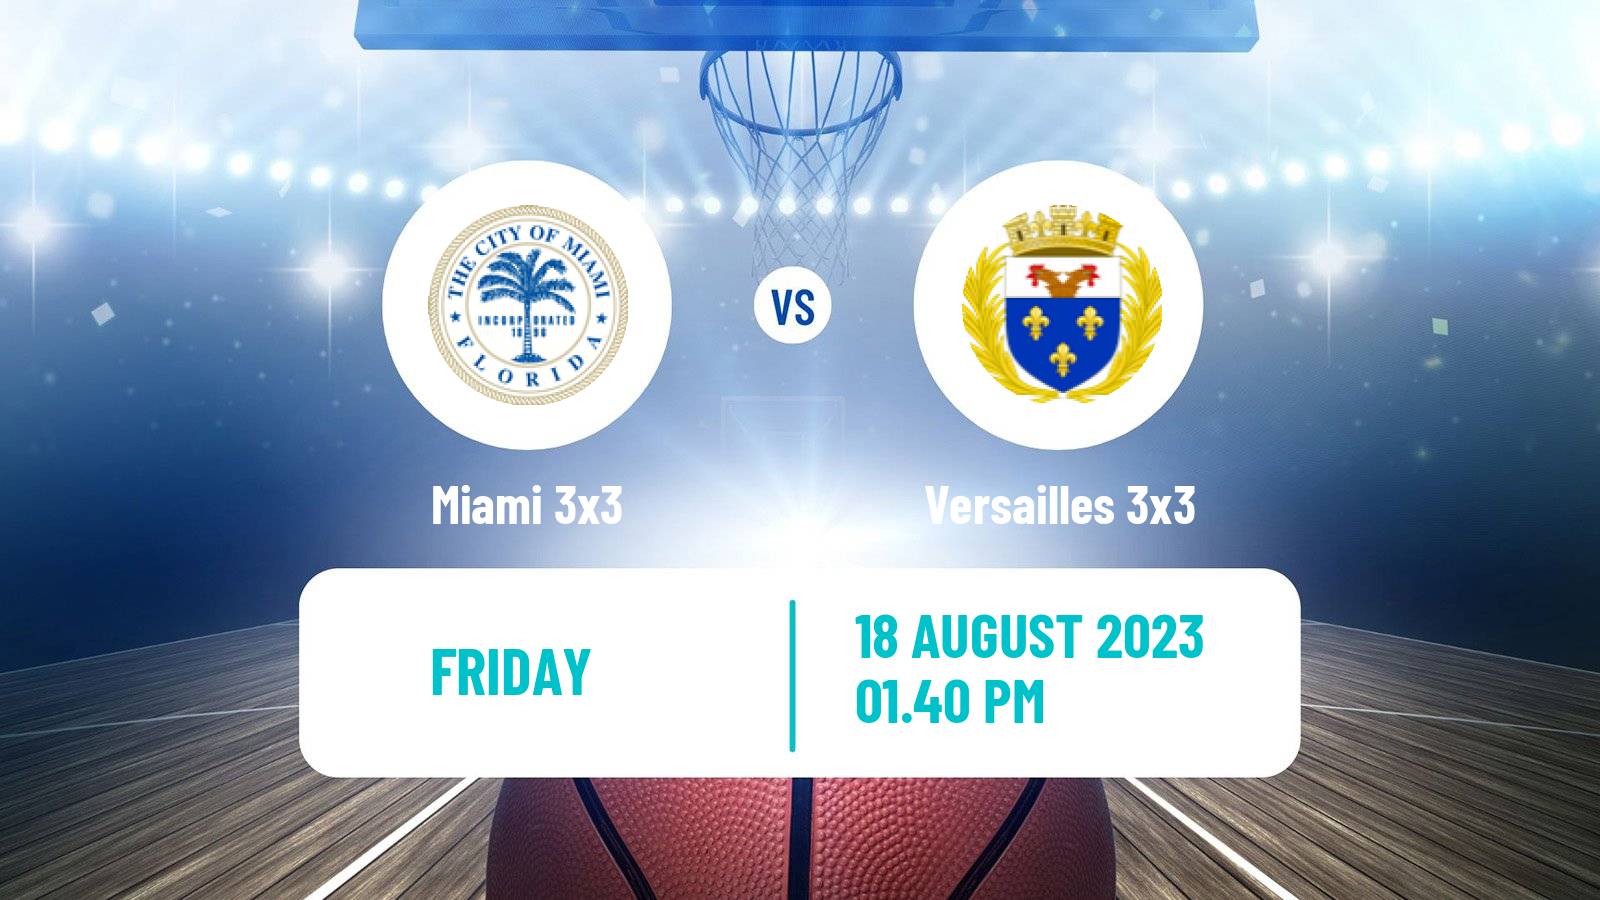 Basketball World Tour Lausanne 3x3 Miami 3x3 - Versailles 3x3